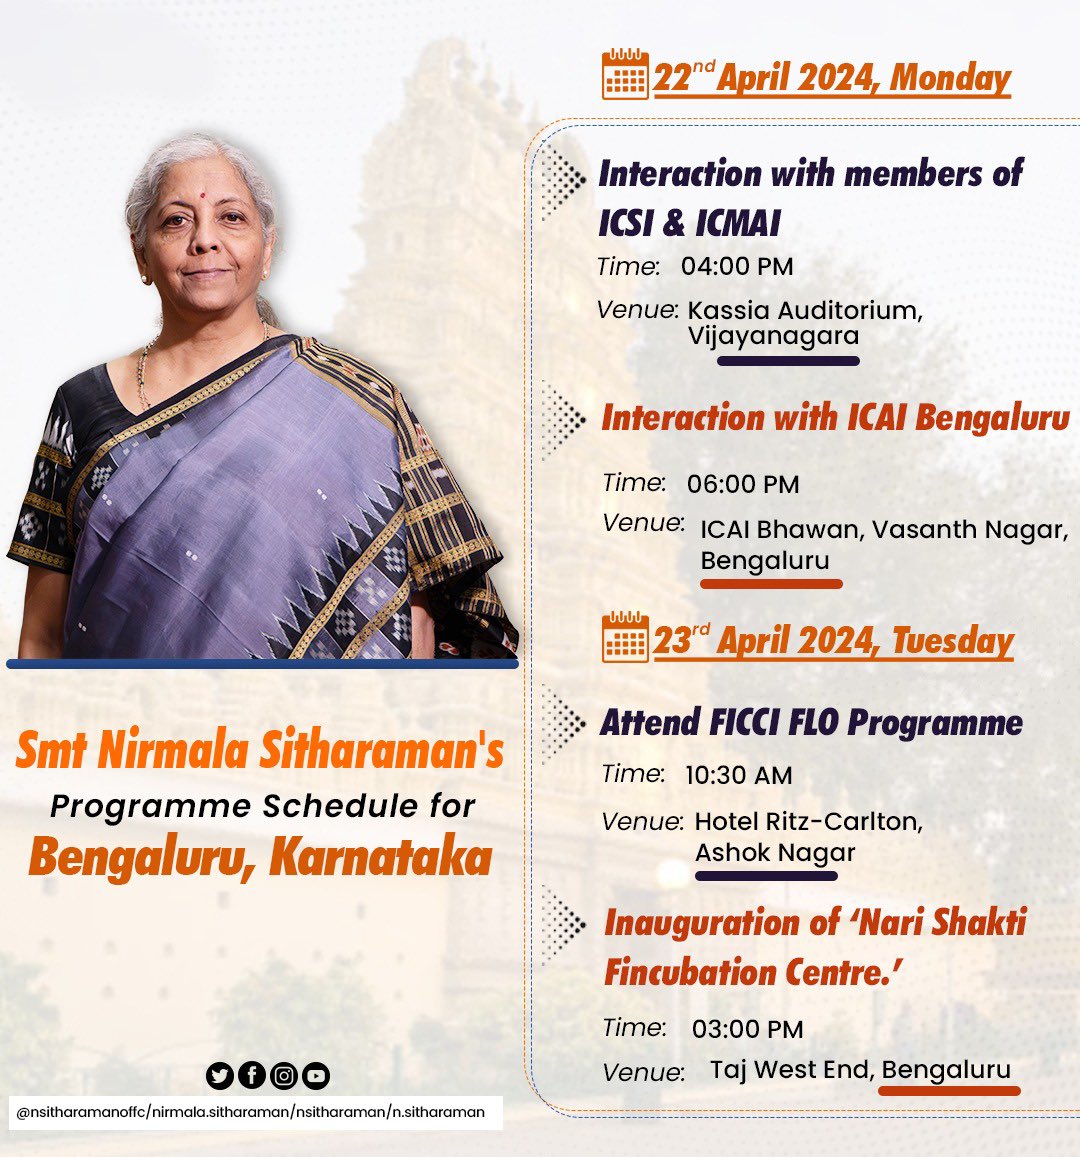 Programme details of Smt @nsitharaman's visit to Bengaluru, Karnataka on April 22nd and 23rd, 2024. #PhirEkBaarModiSarkaar